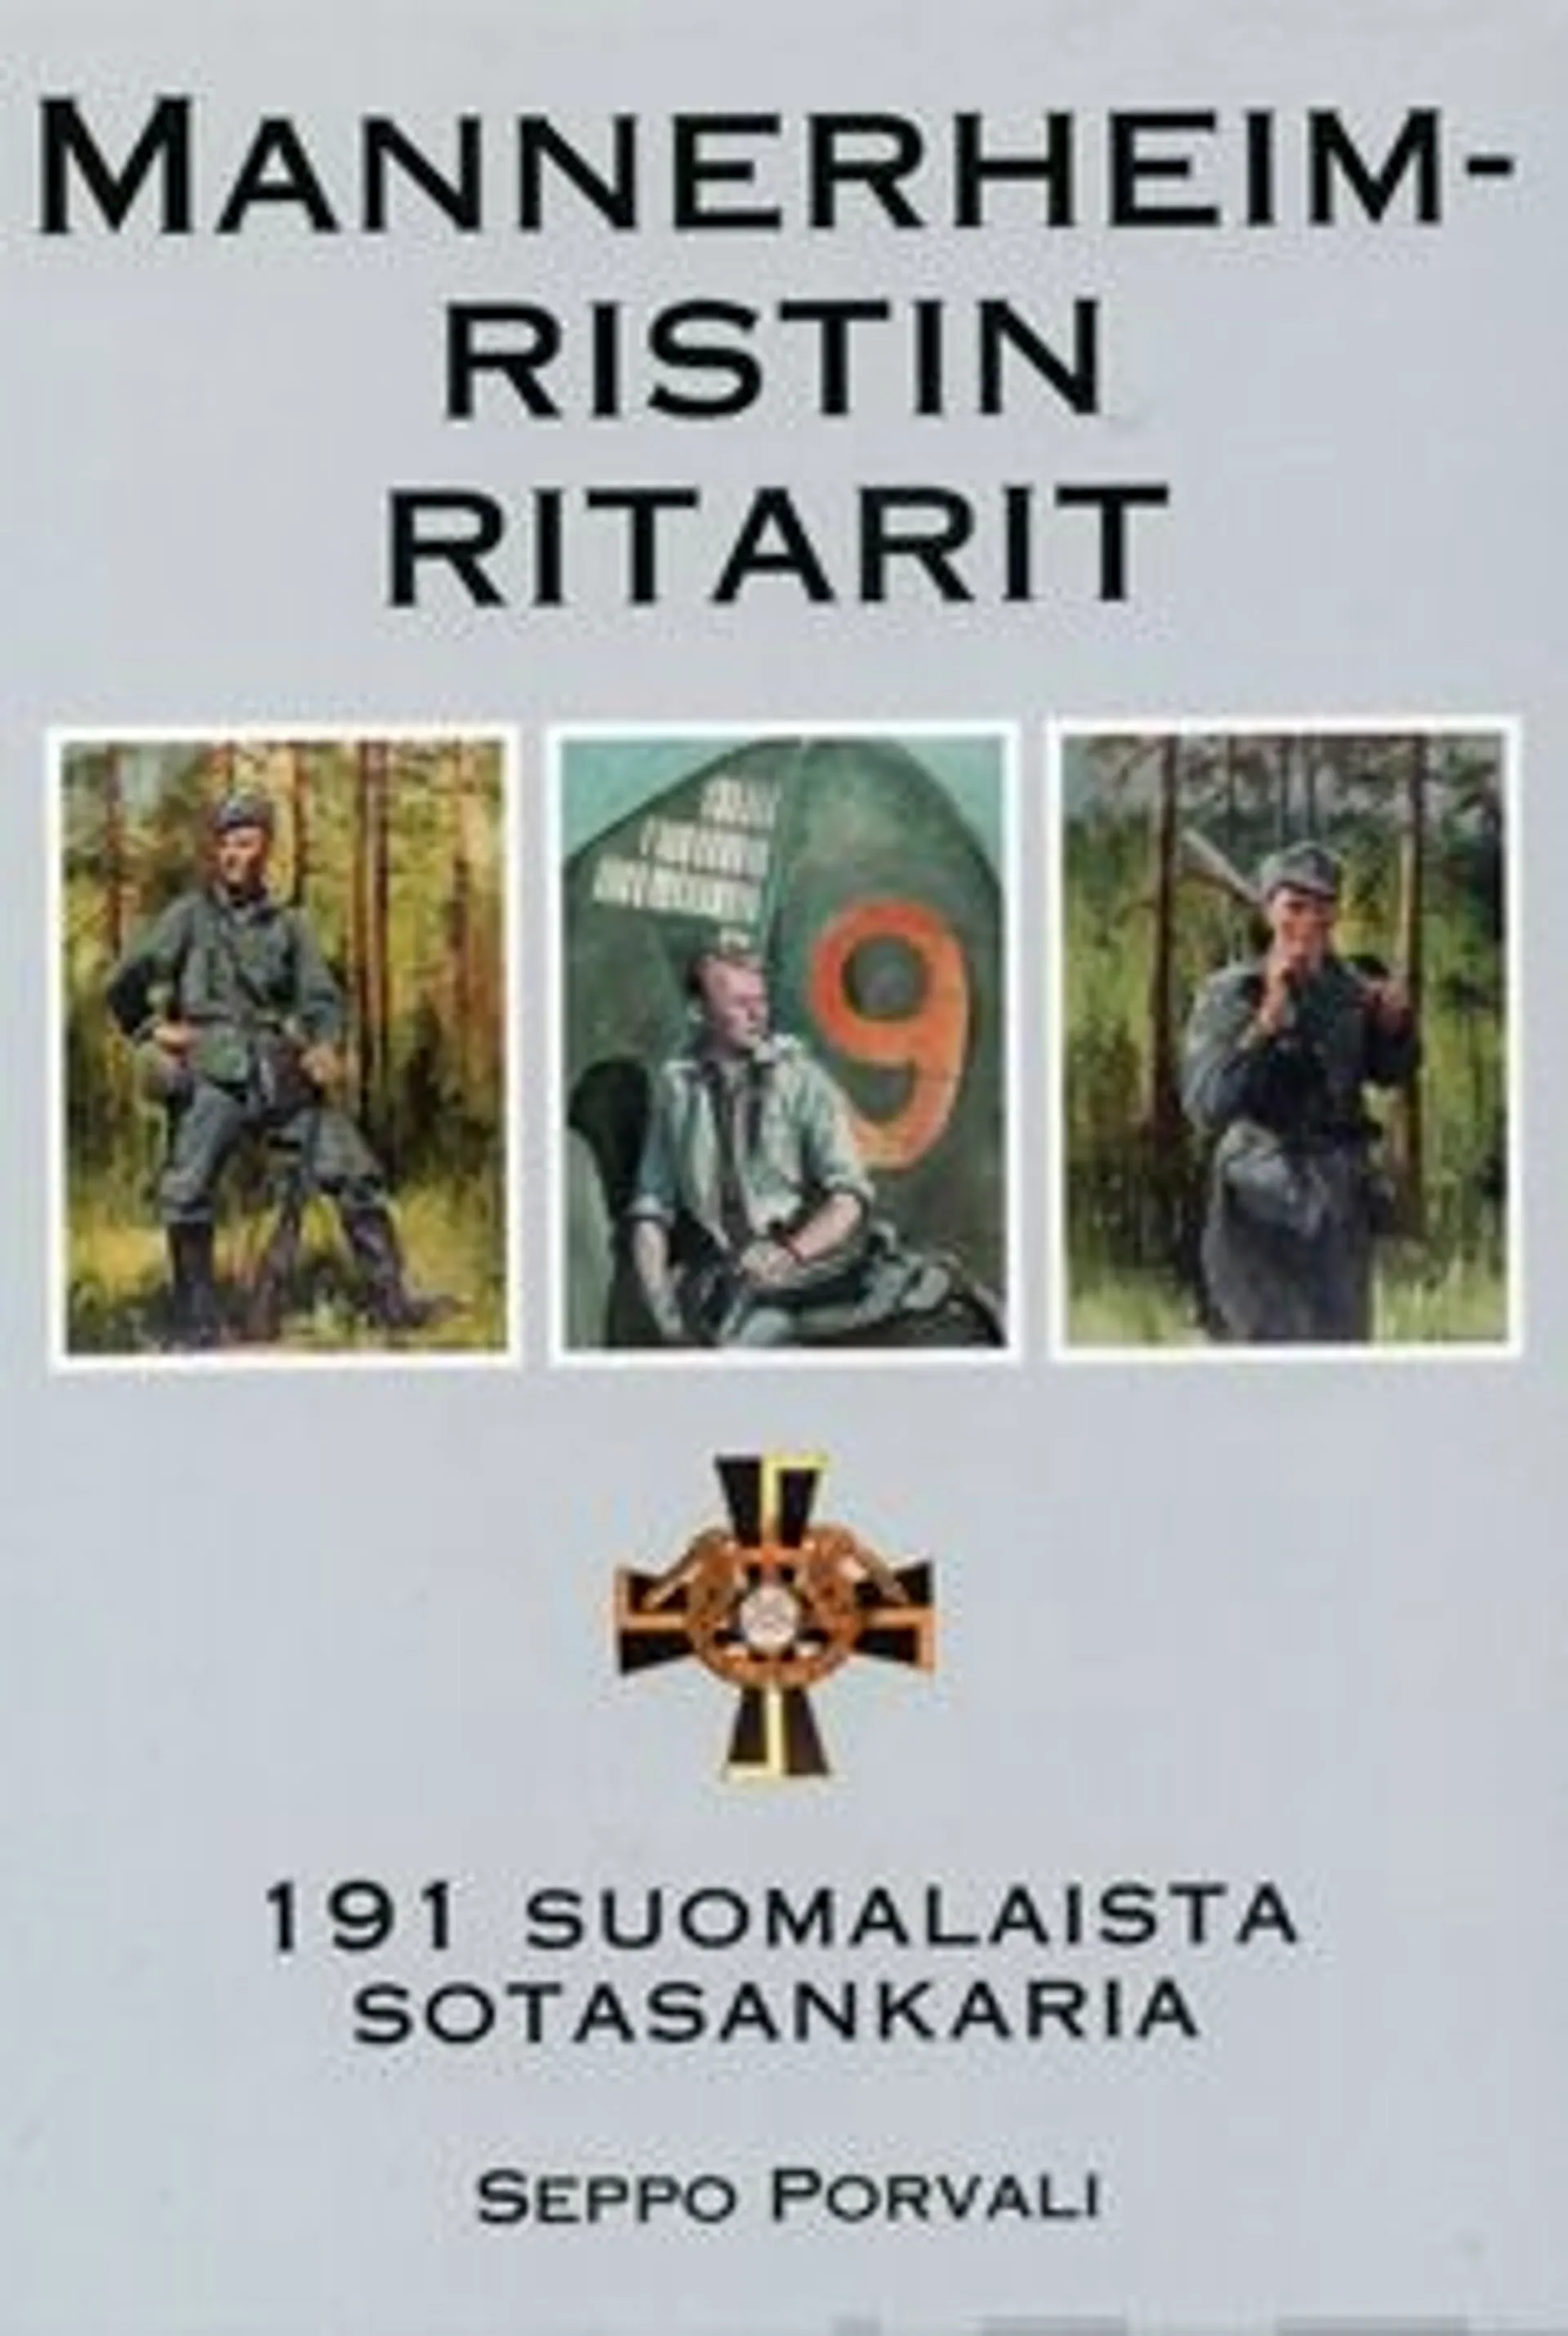 Mannerheim-ristin ritarit - 191 suomalaista sotasankaria